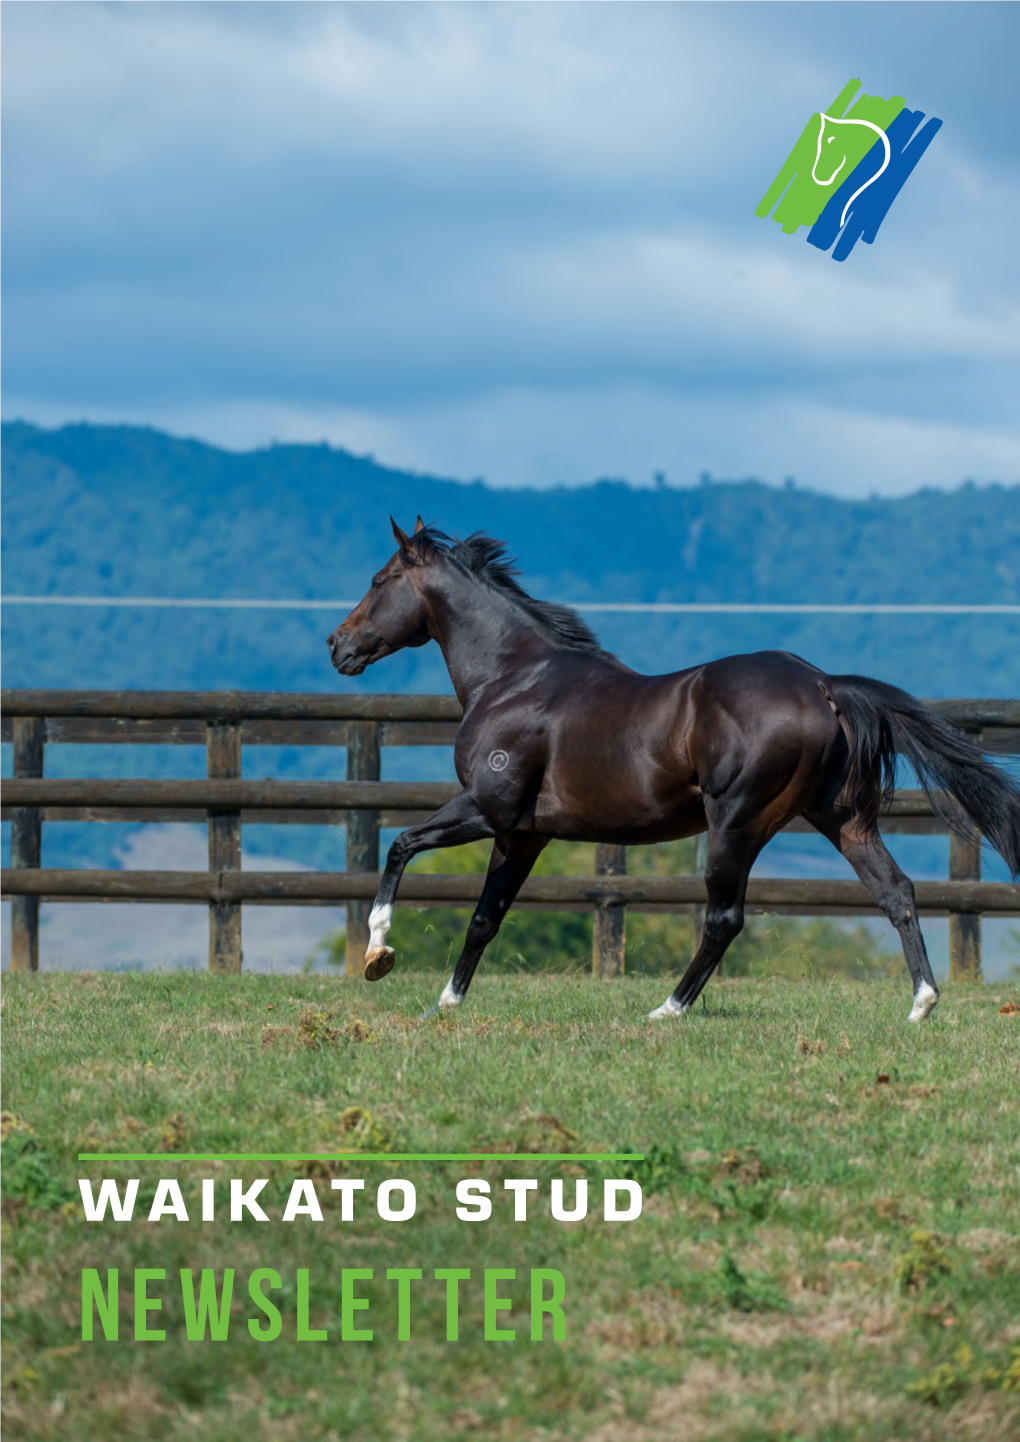 The Waikato Newsletter